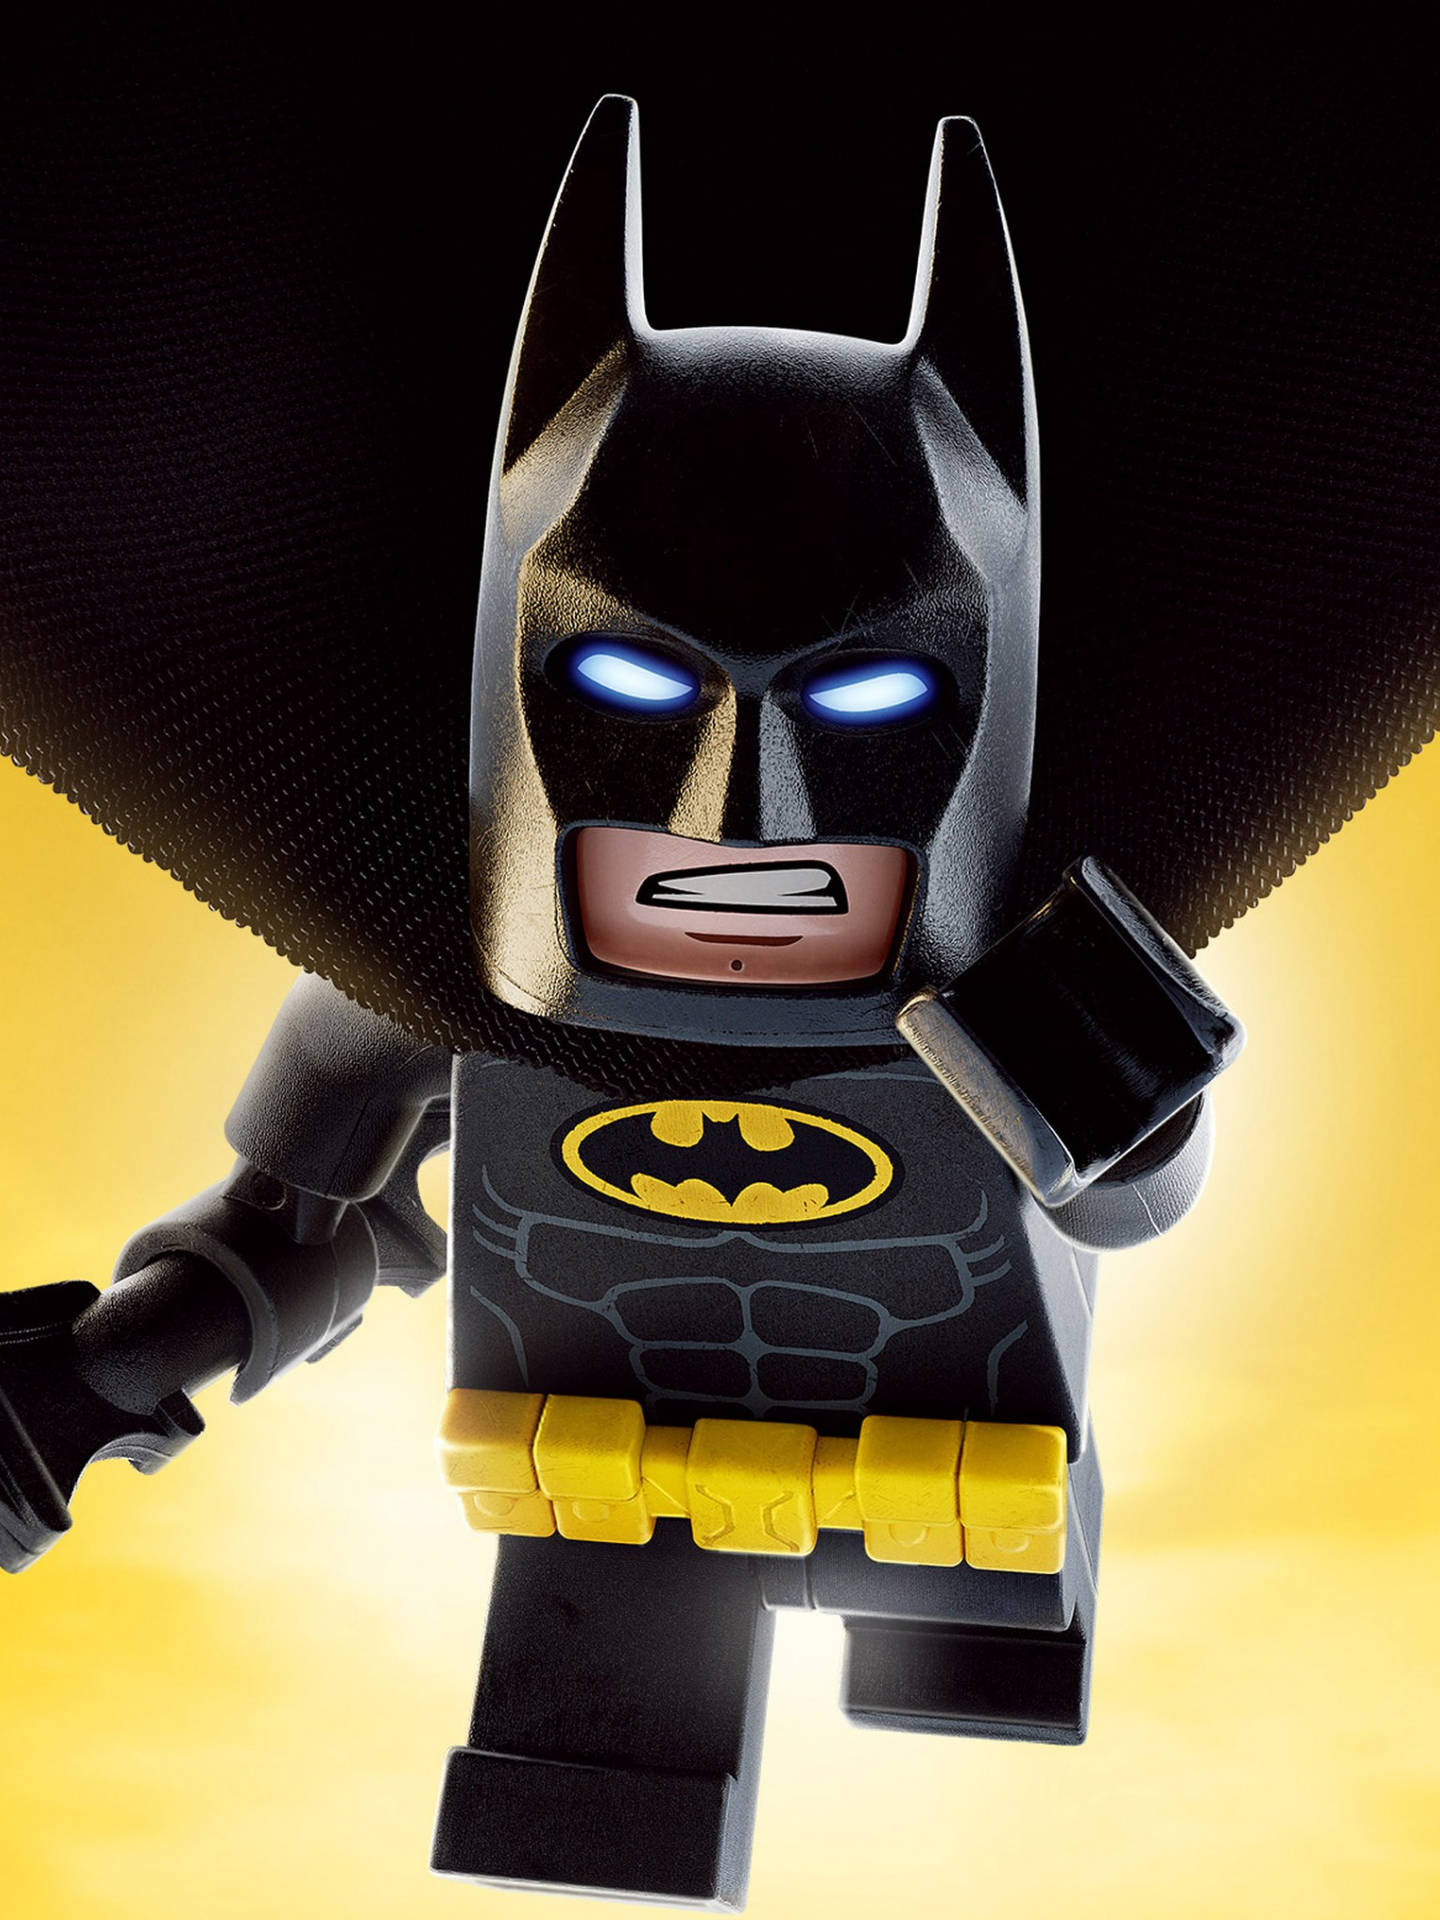 Bruce Wayne From The Lego Batman Movie Wallpaper